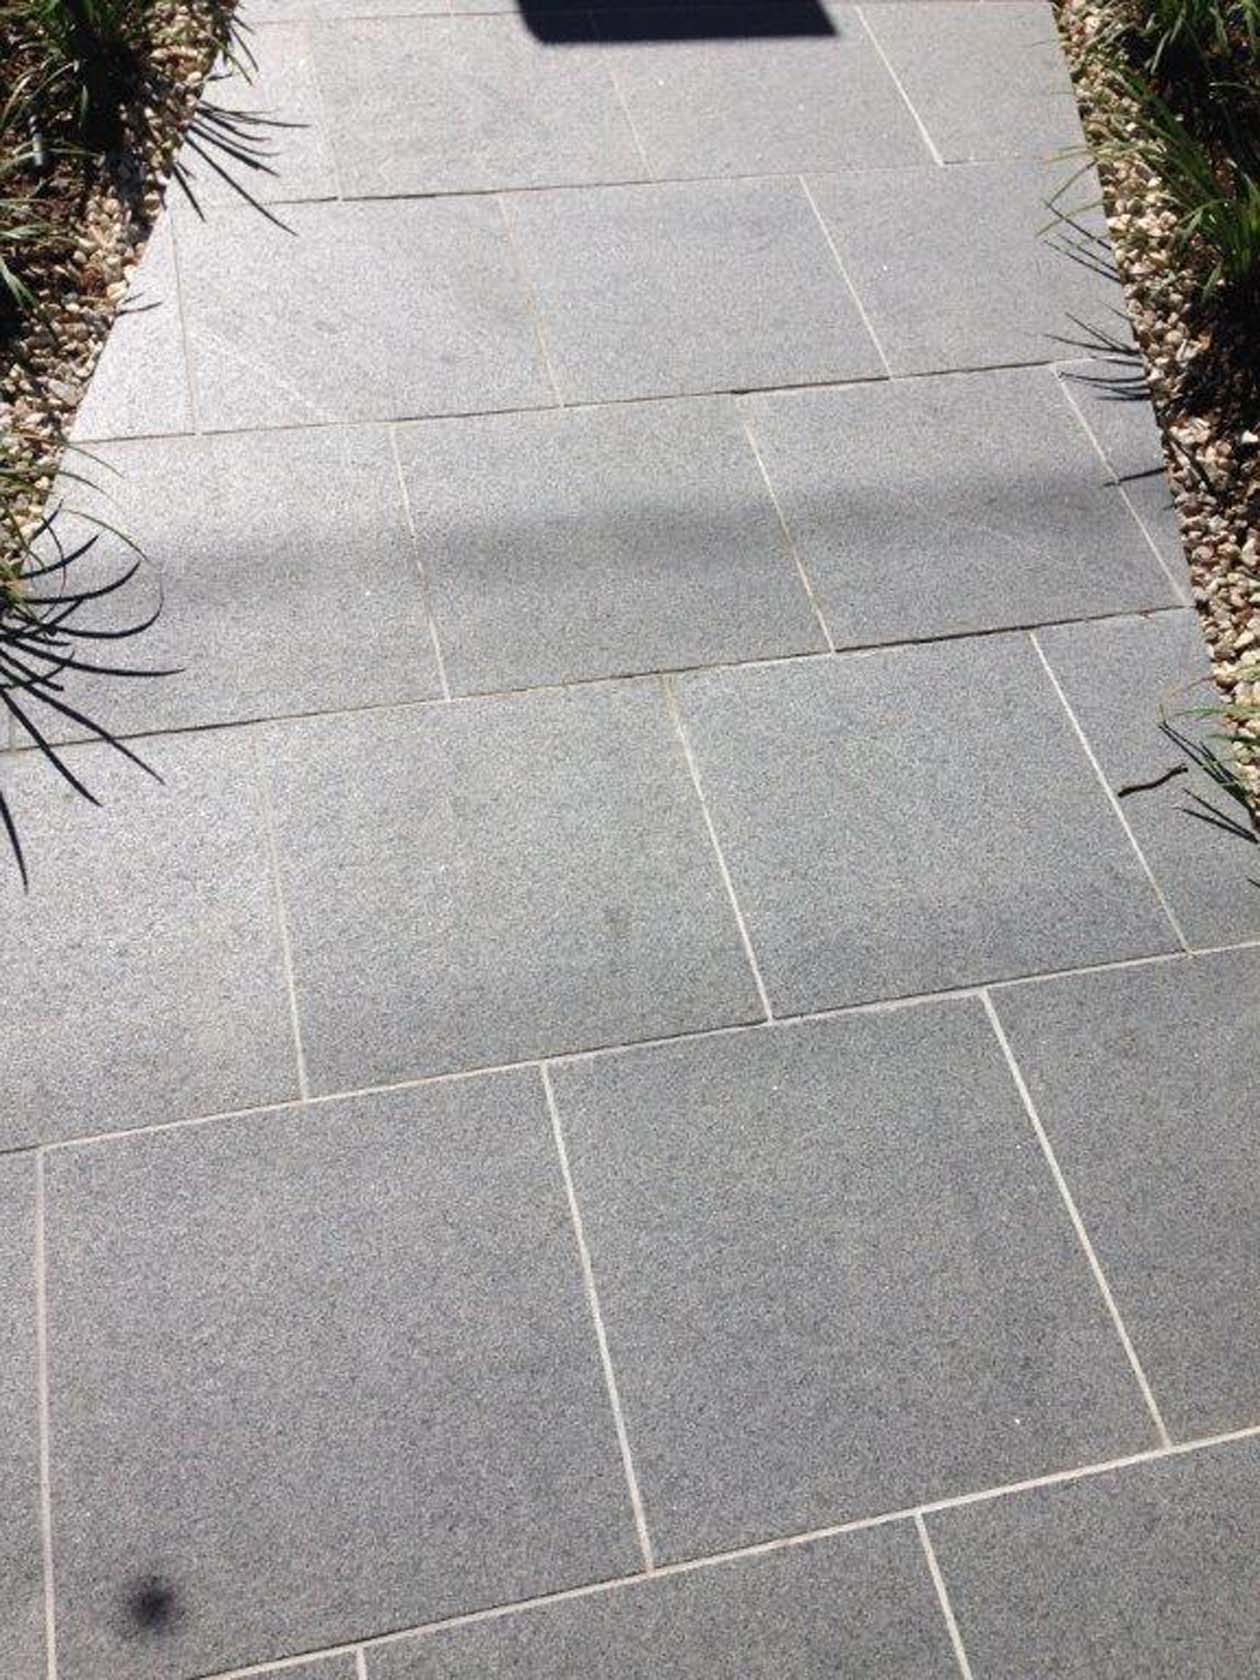 Dark Grey Granite in a Brick or Stretcher Pattern